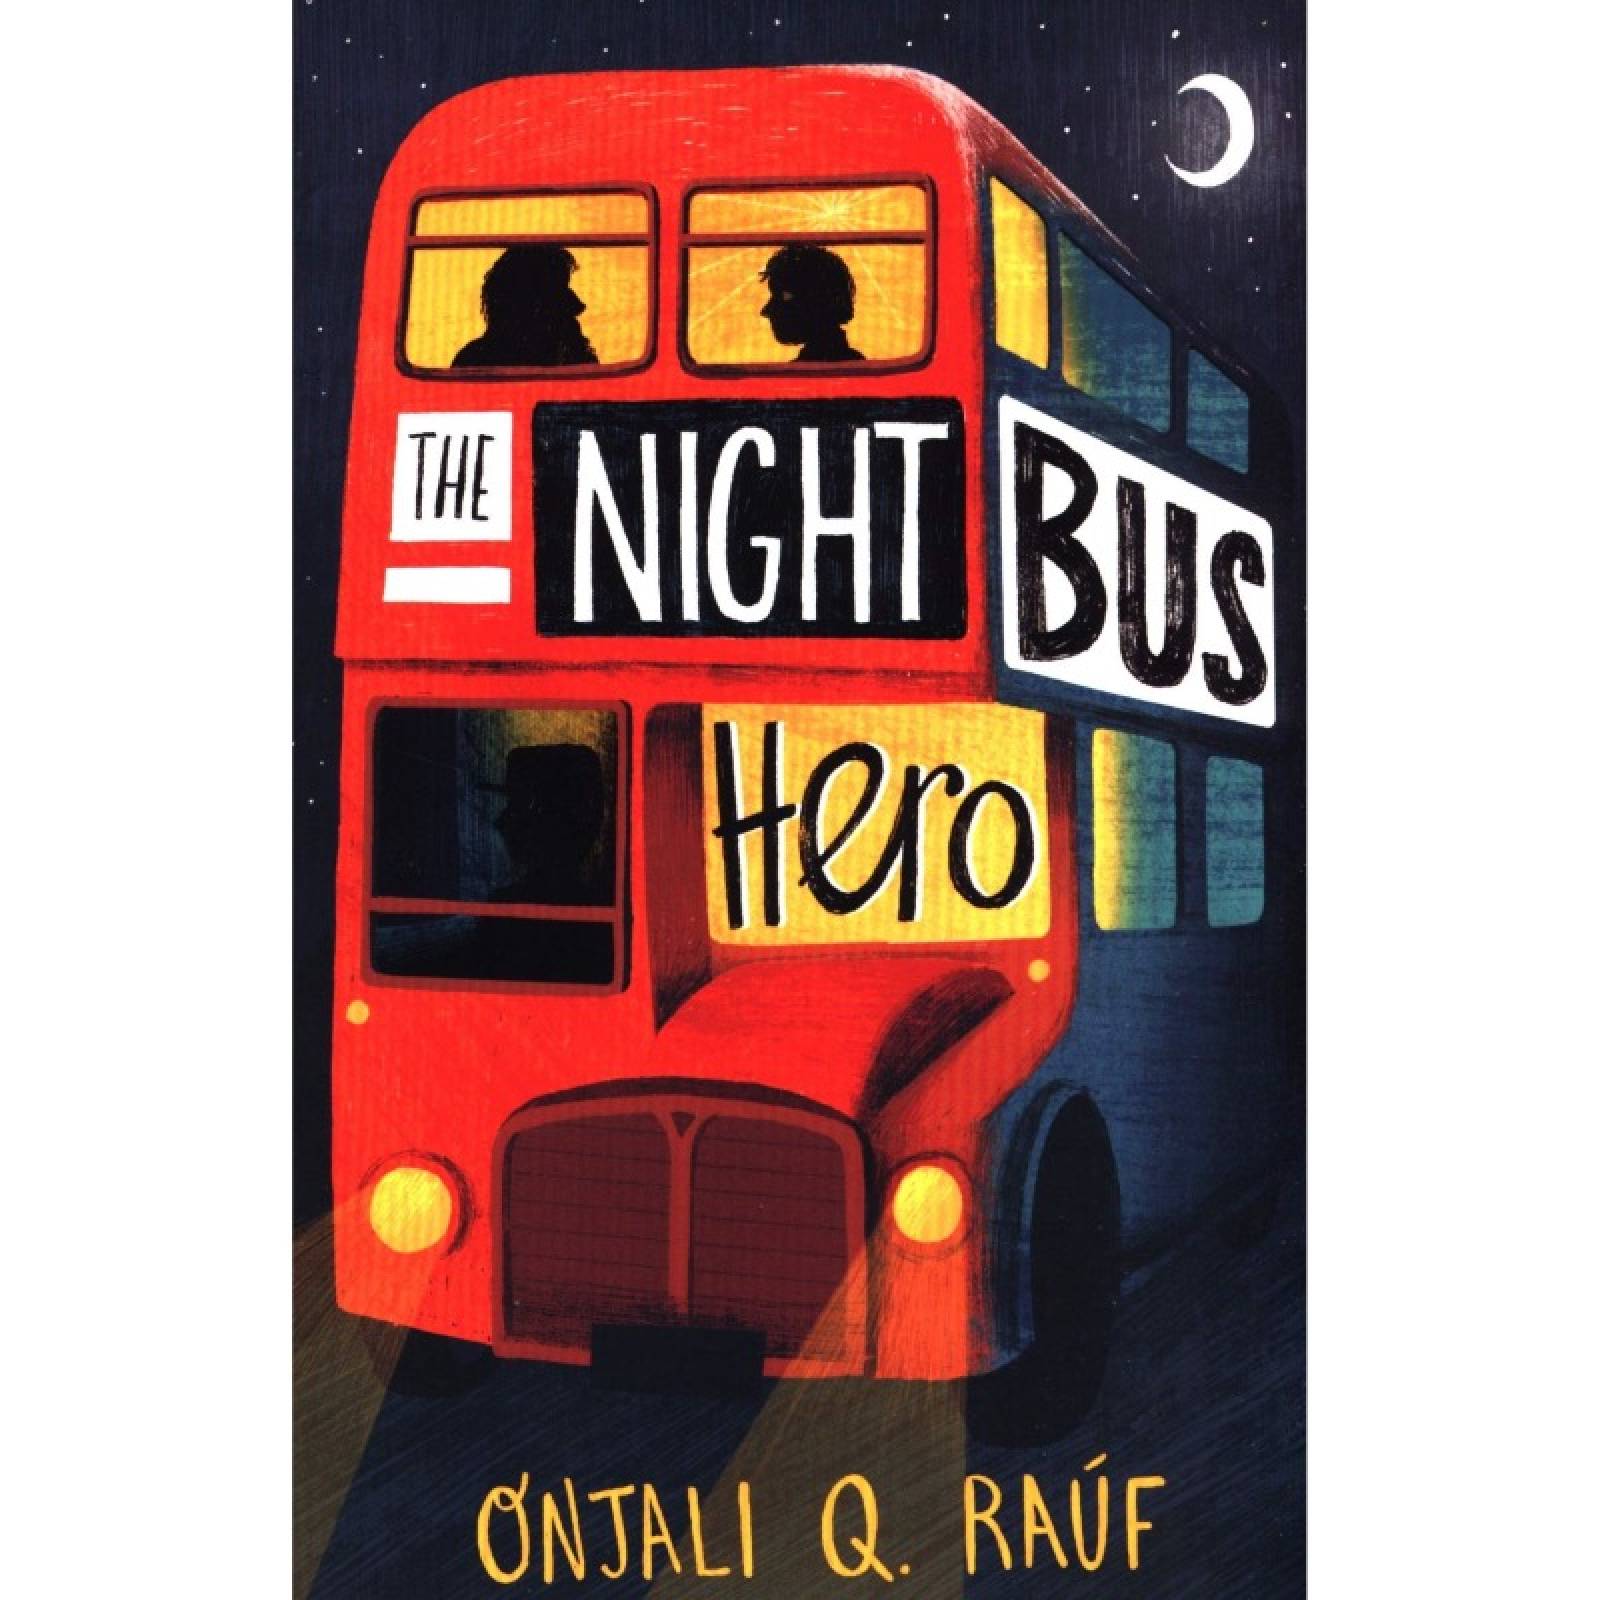 The Night Bus Hero By Onjali Q. Rauf - Paperback Book